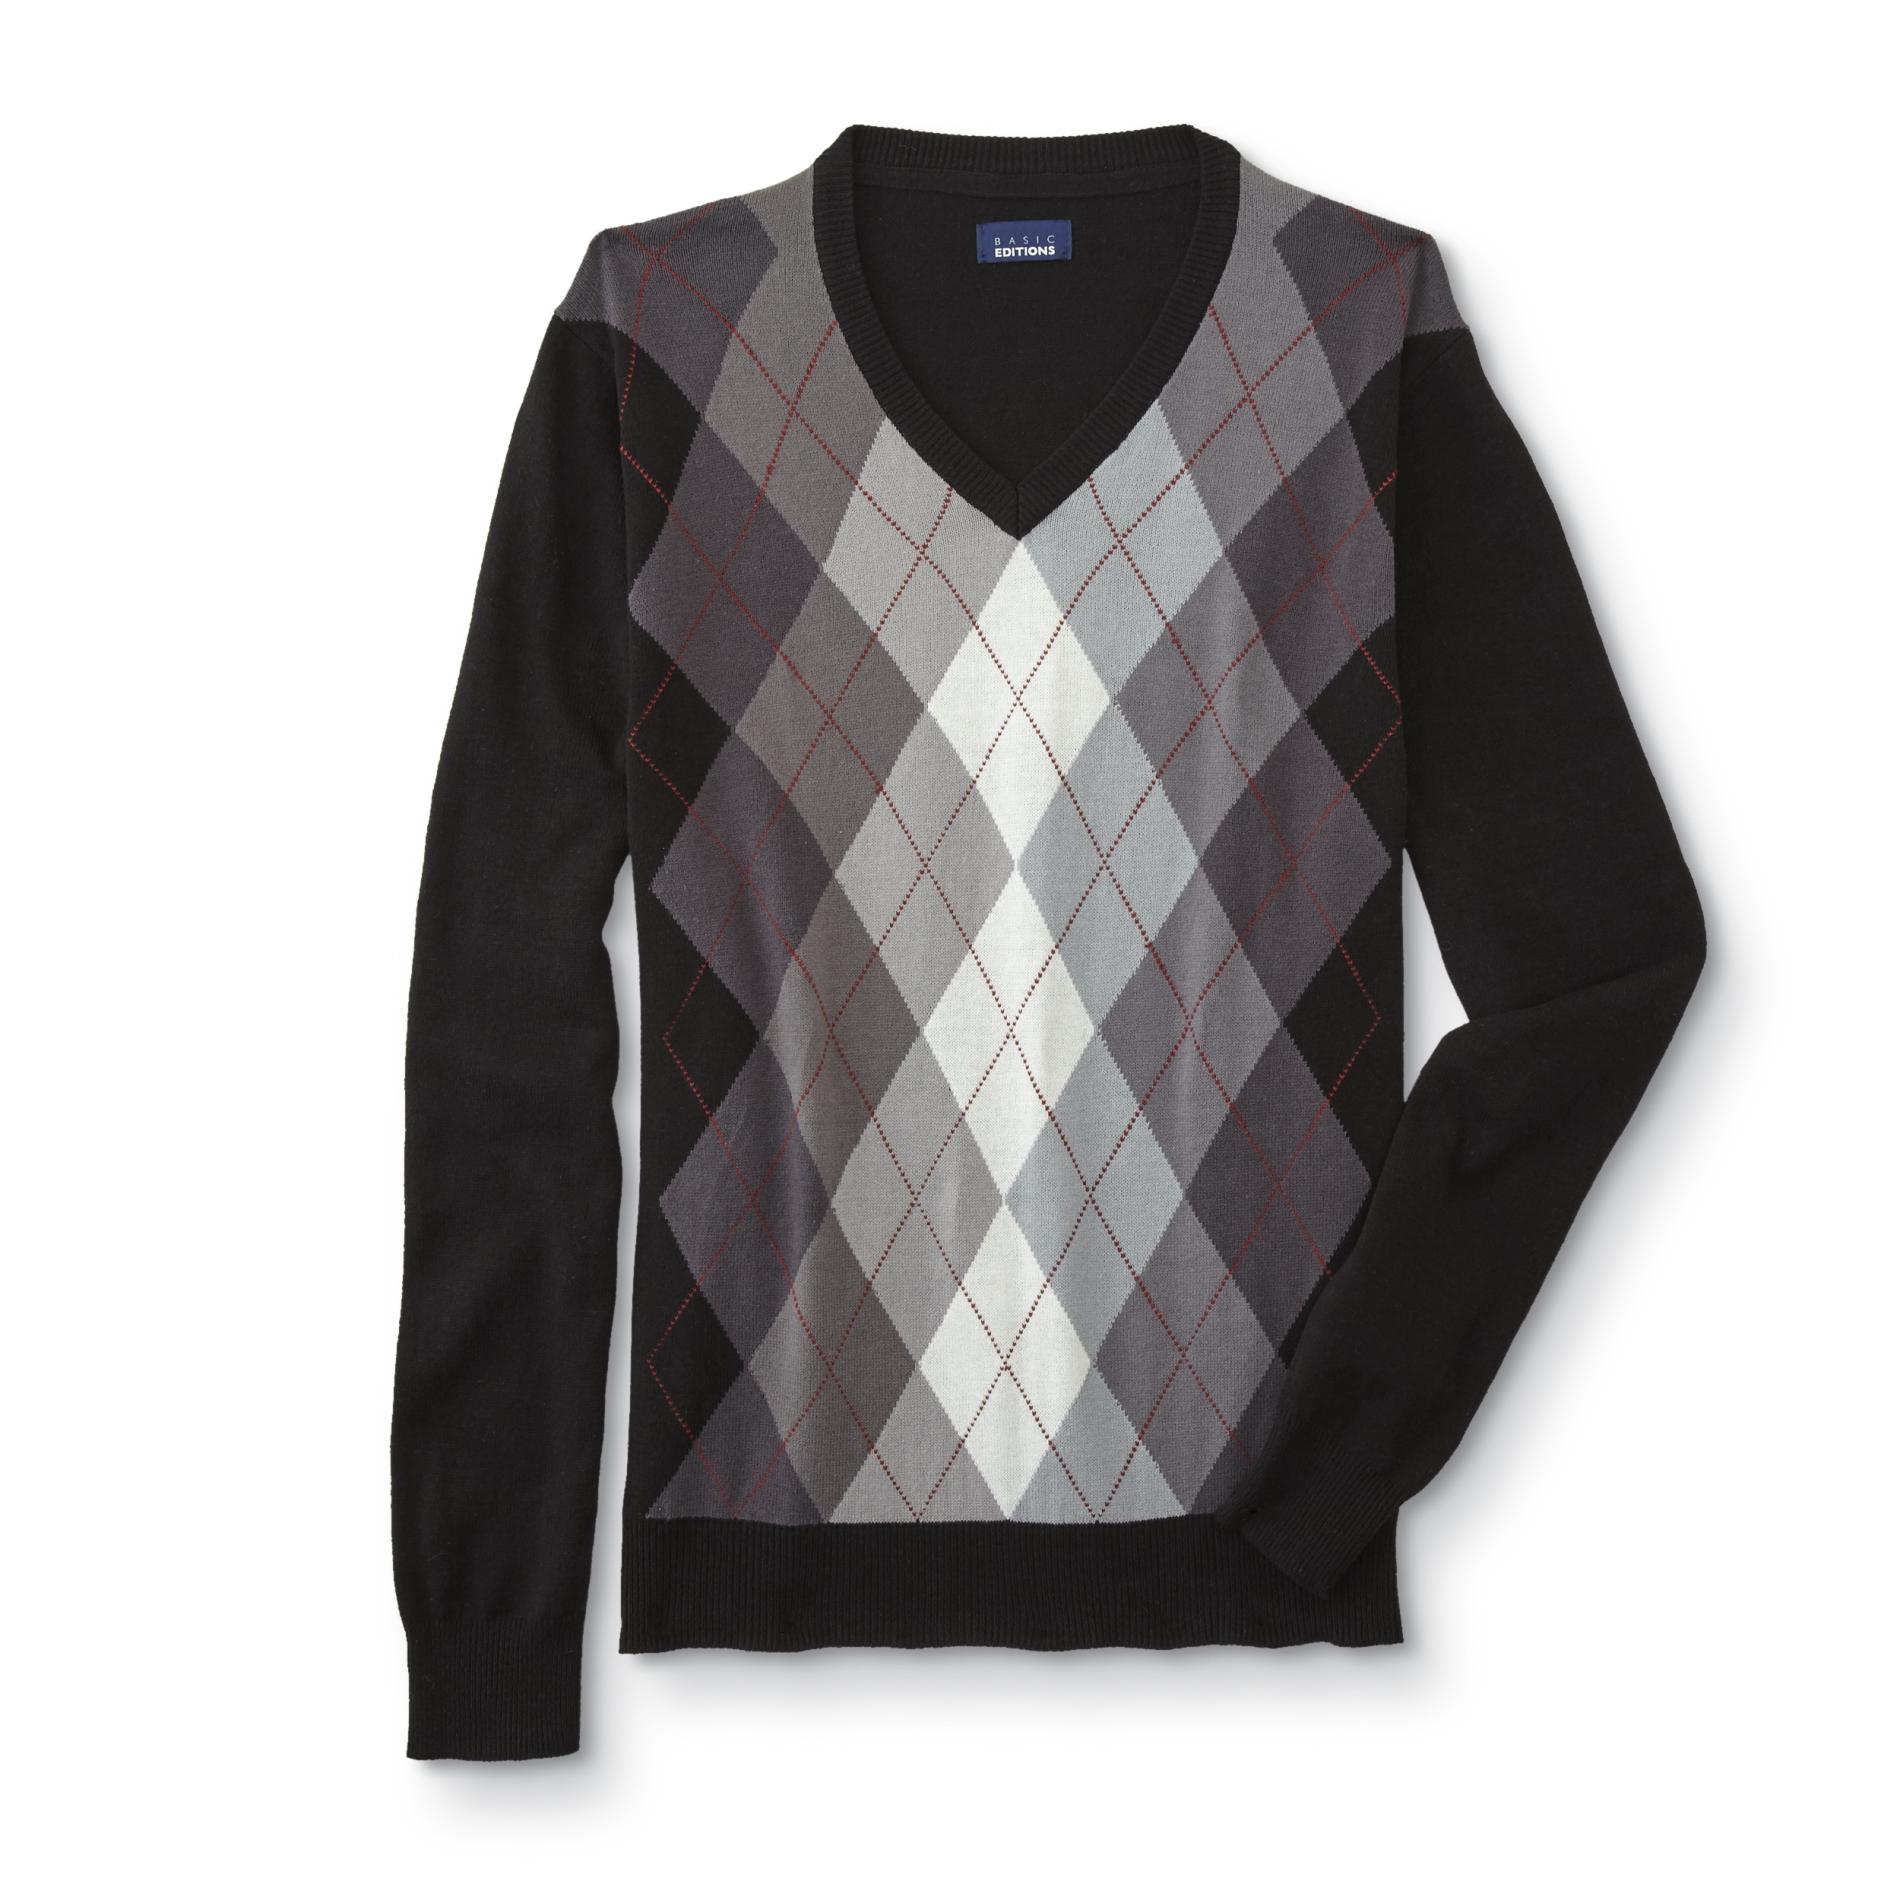 Basic Editions Men's V-Neck Sweater - Argyle | Shop Your Way: Online ...